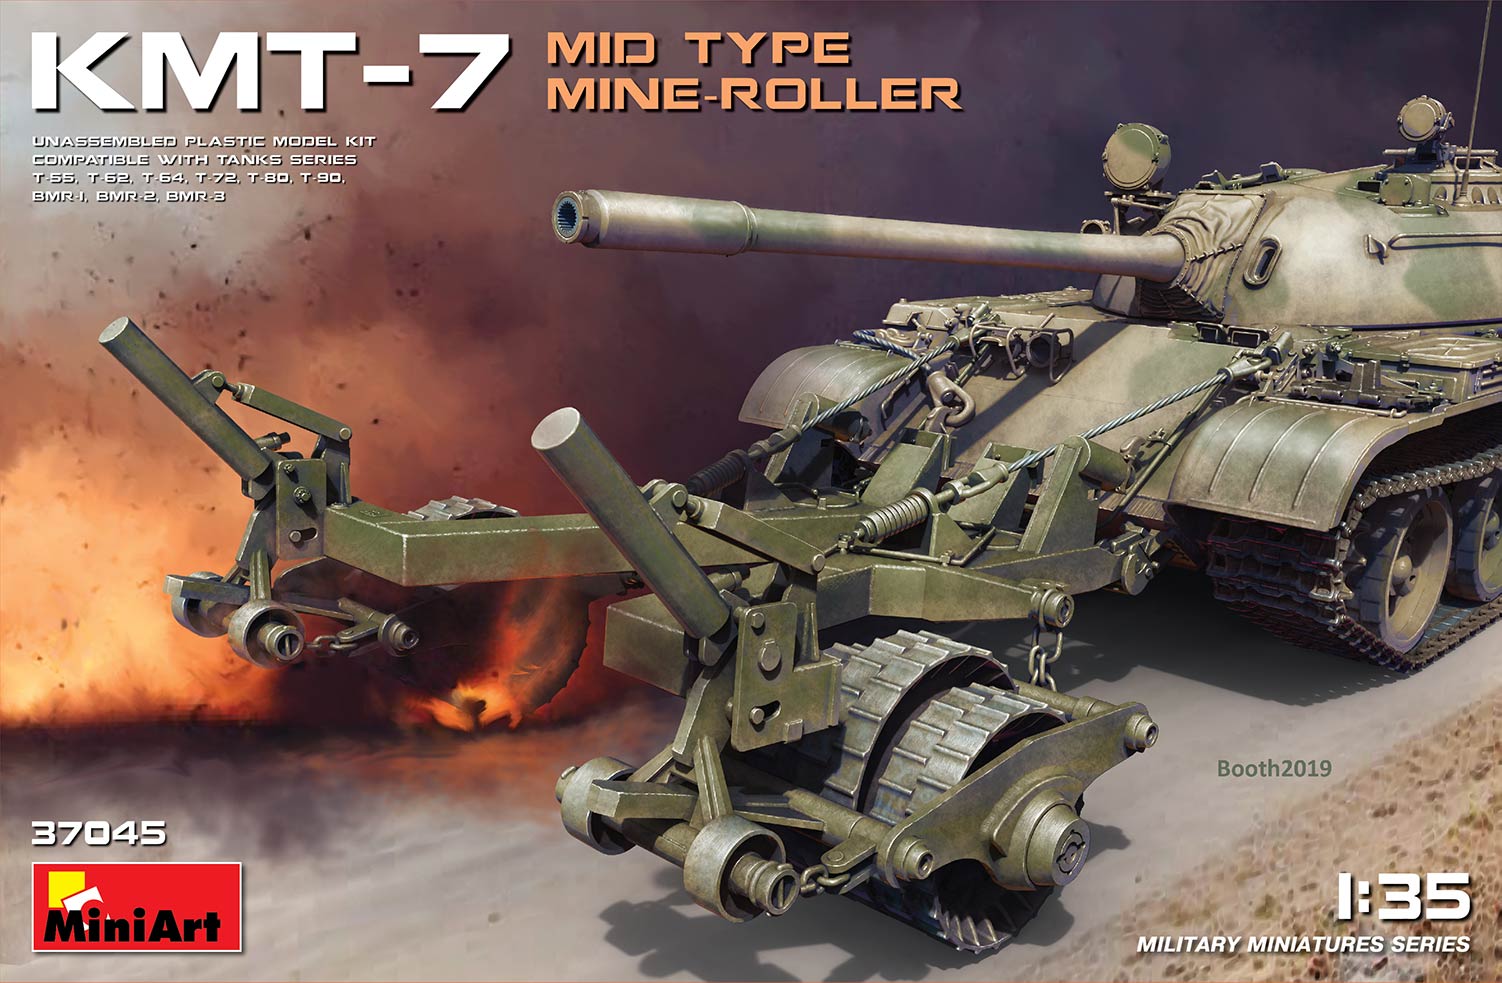 37045  дополнения из пластика  KMT-7 Mid Type Mine Roller  (1:35)